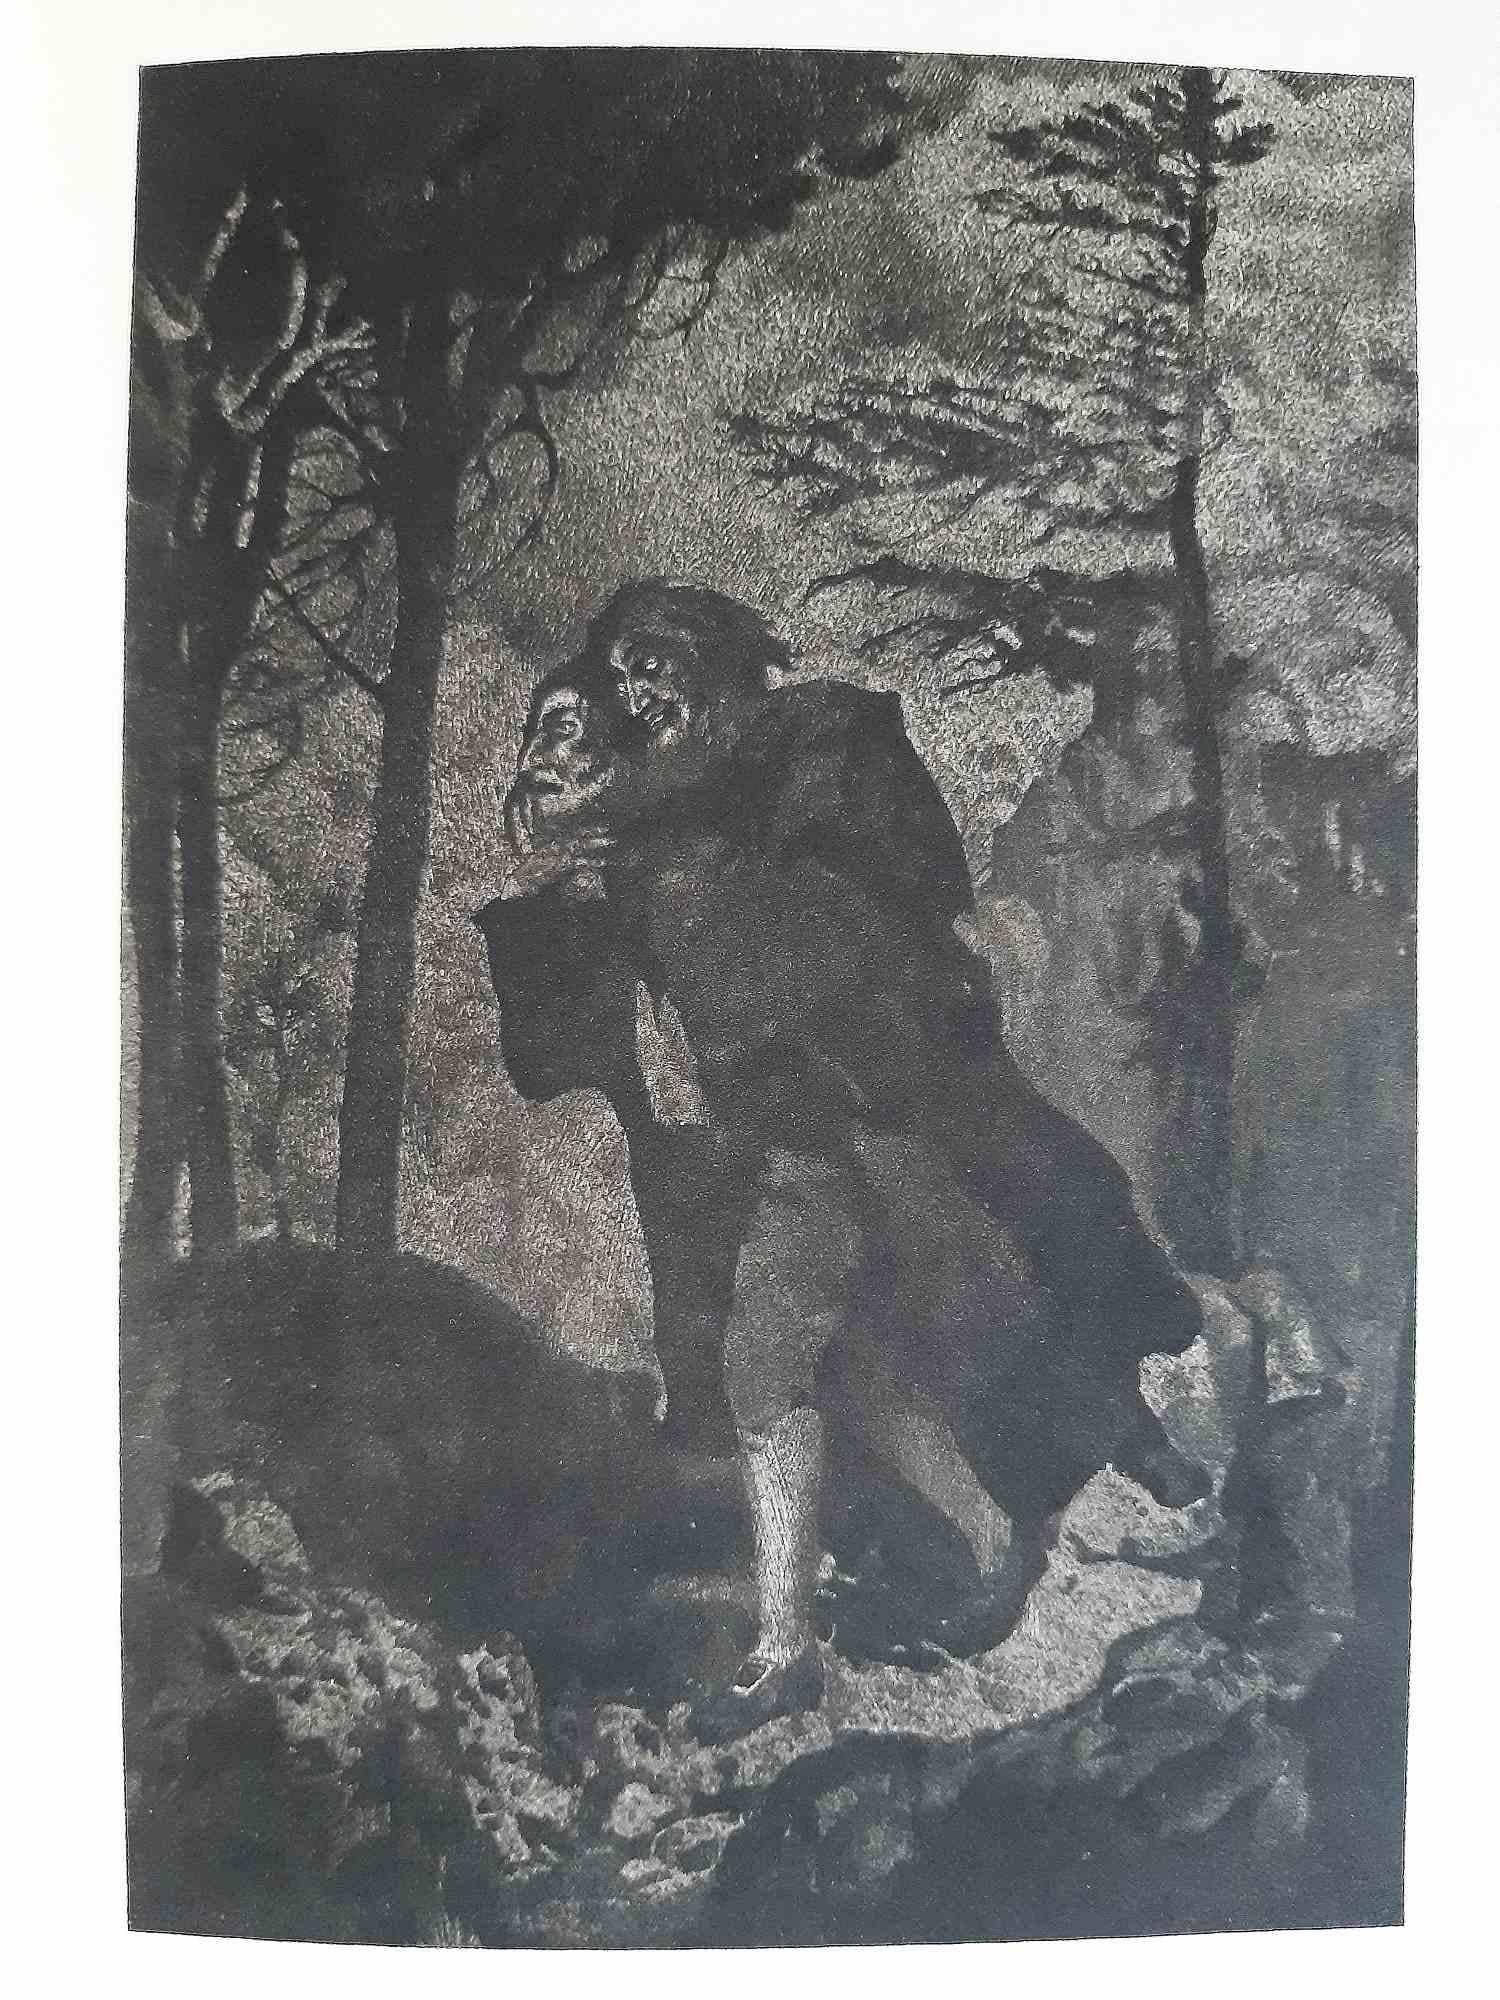 Die Elixiere des Teufels - Rare Book Illustrated by Hugo Steiner-Prag - 1907 For Sale 6